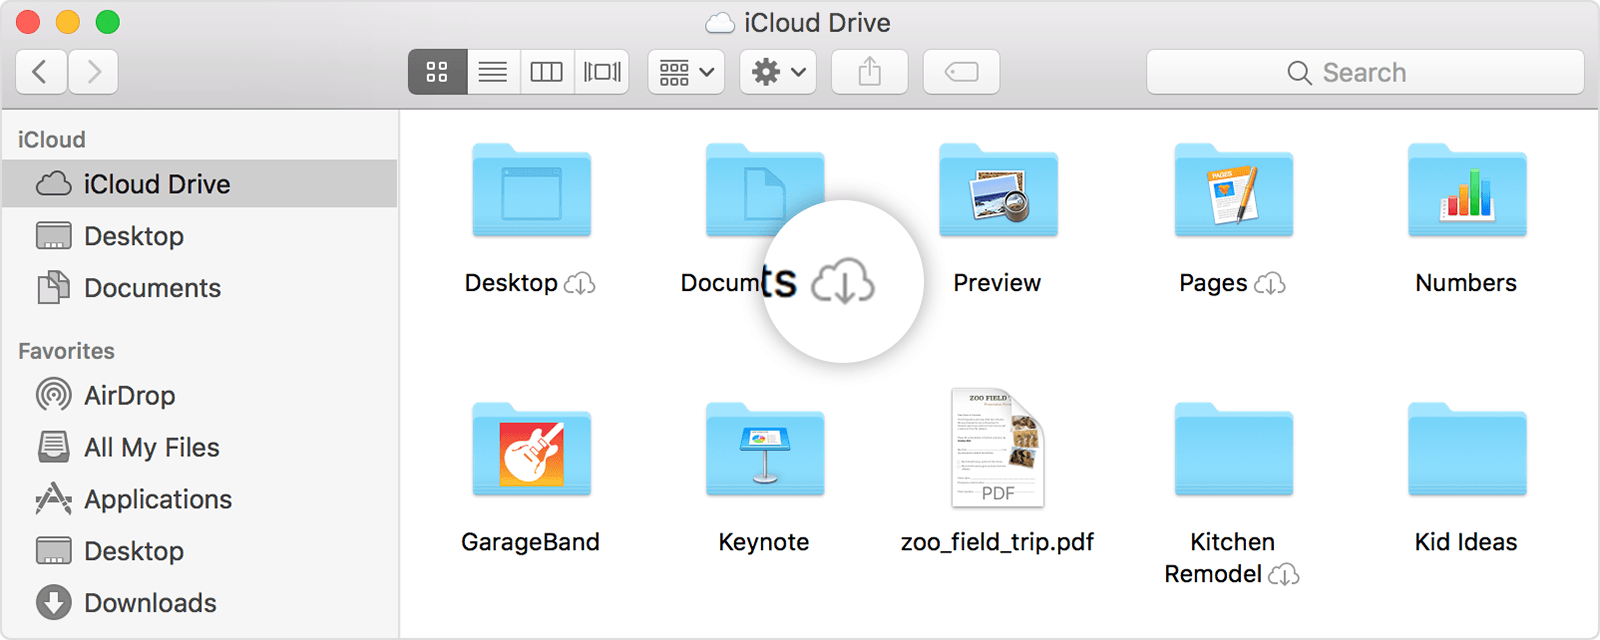 Share icloud drive files